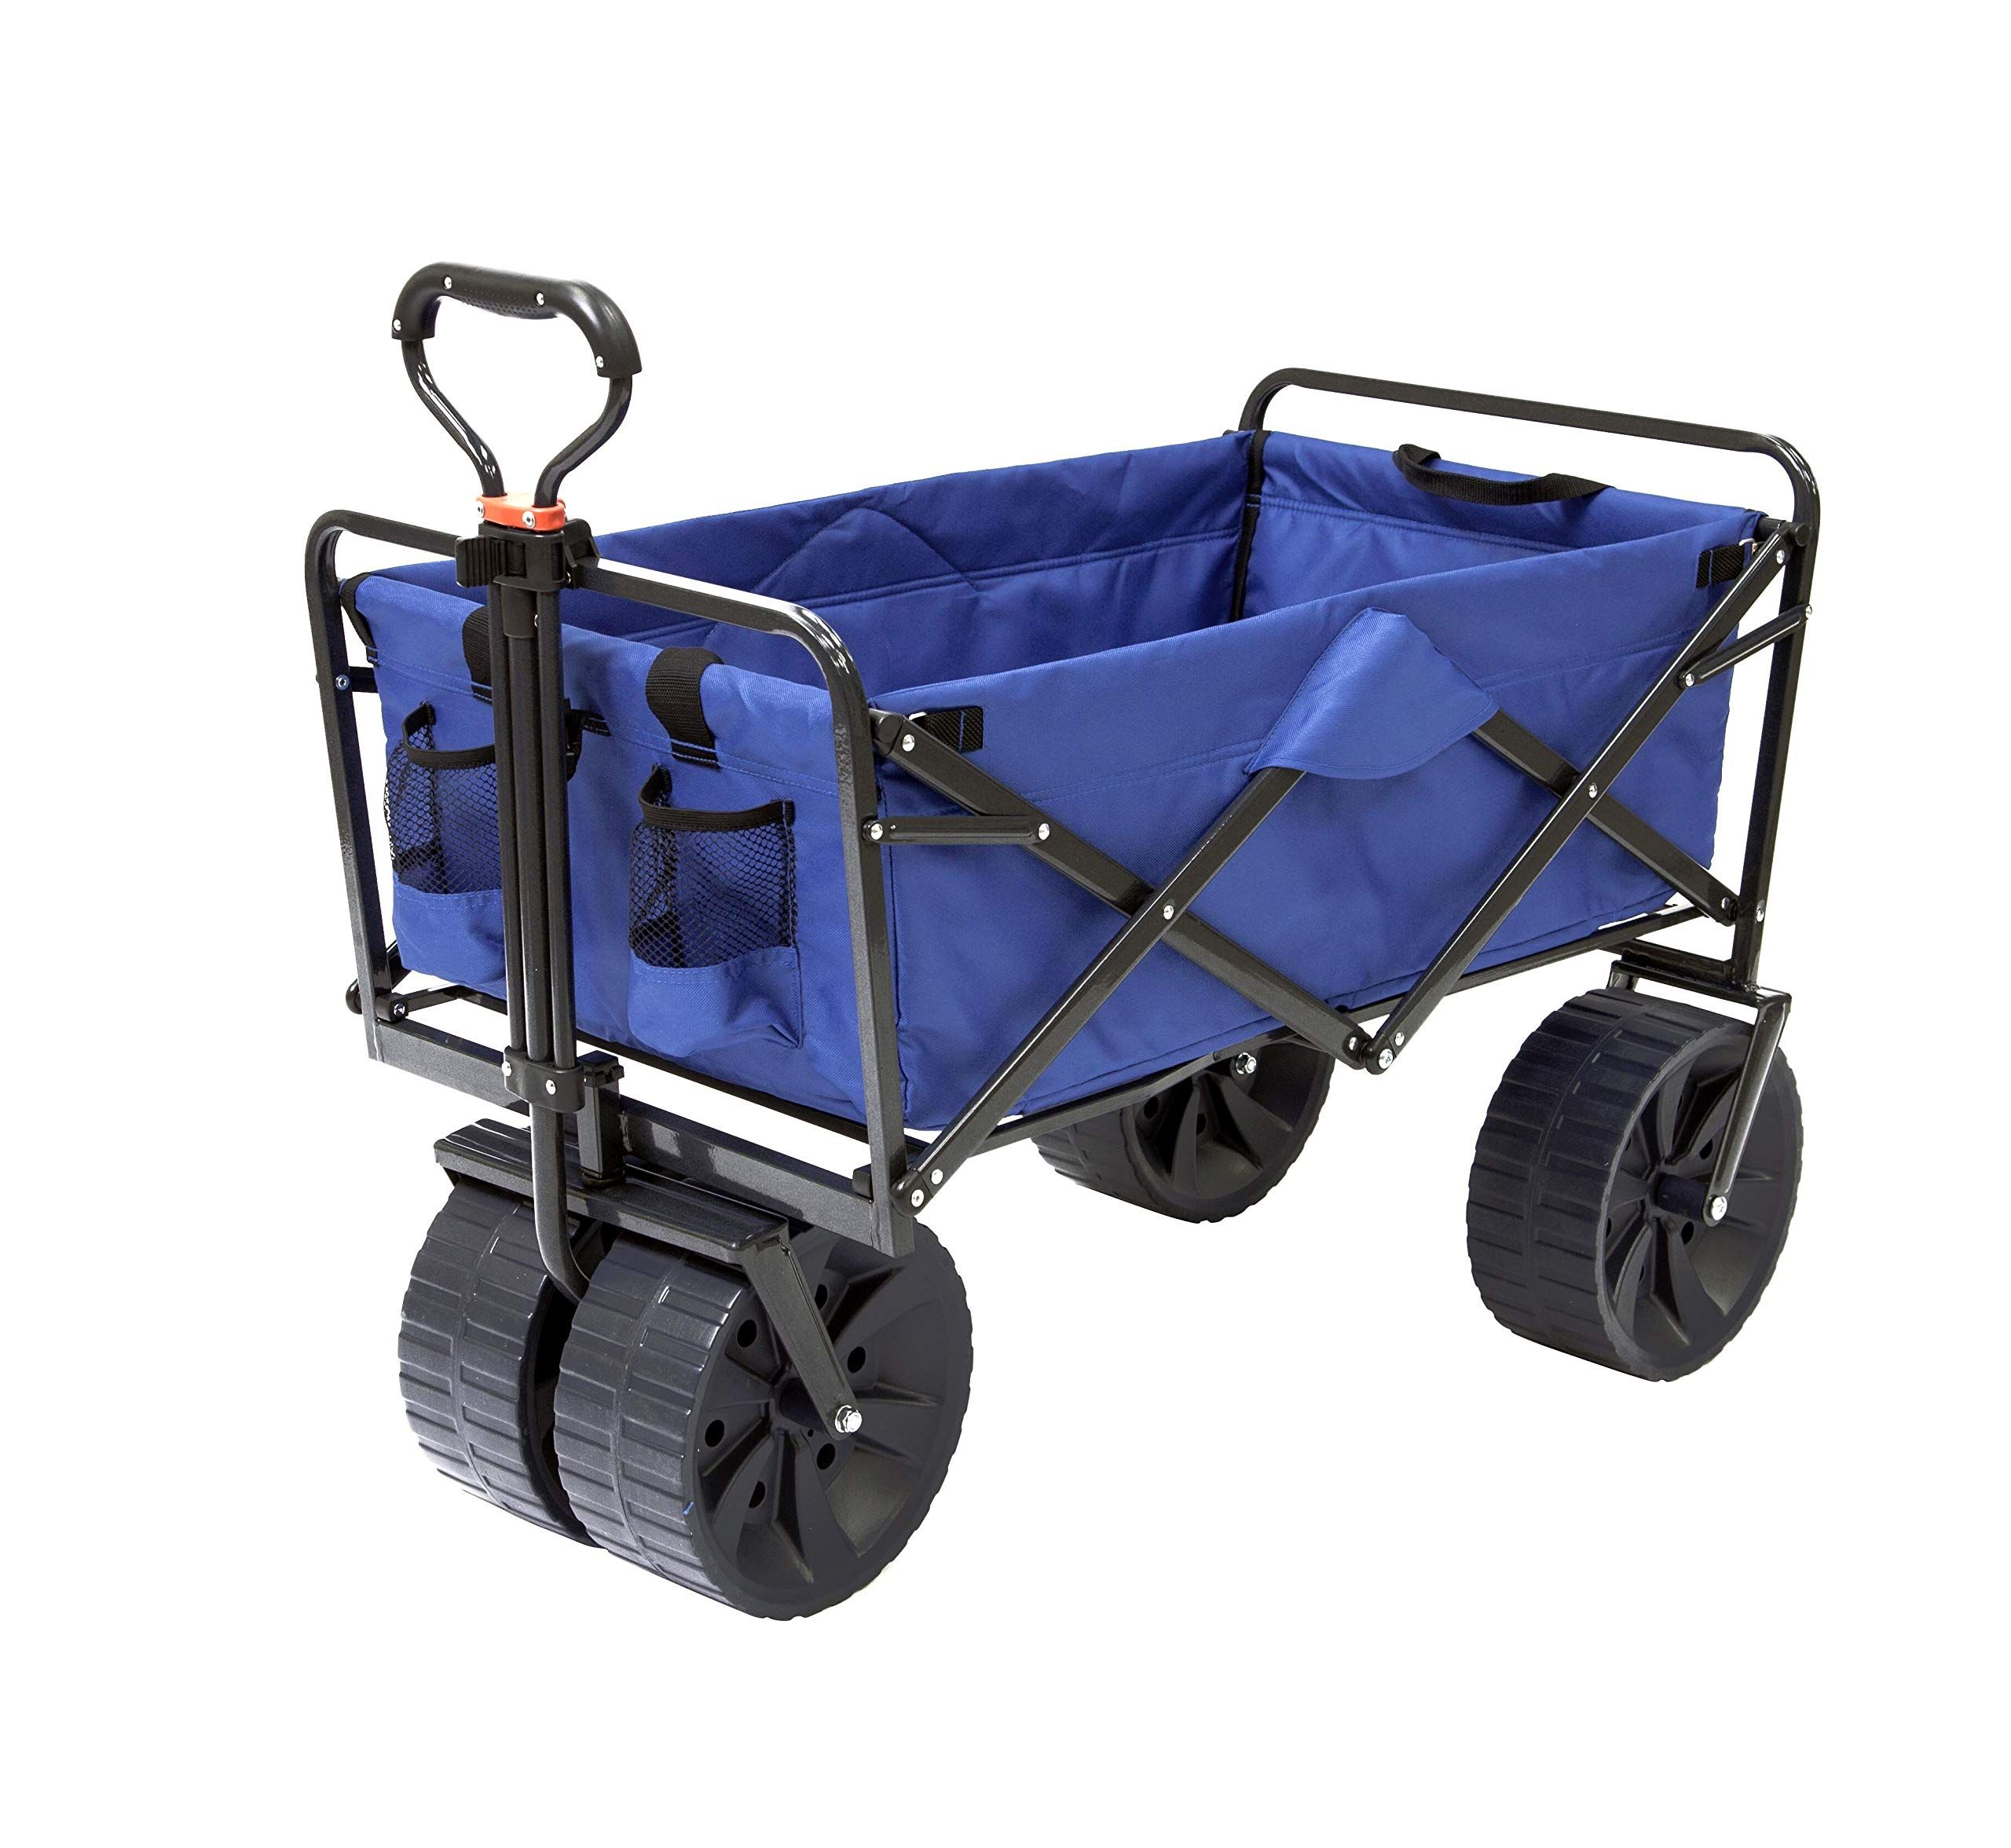 Mac Sports Heavy Duty Collapsible Folding All Terrain Utility Beach Wagon Cart, Blue/Black | Amazon (US)